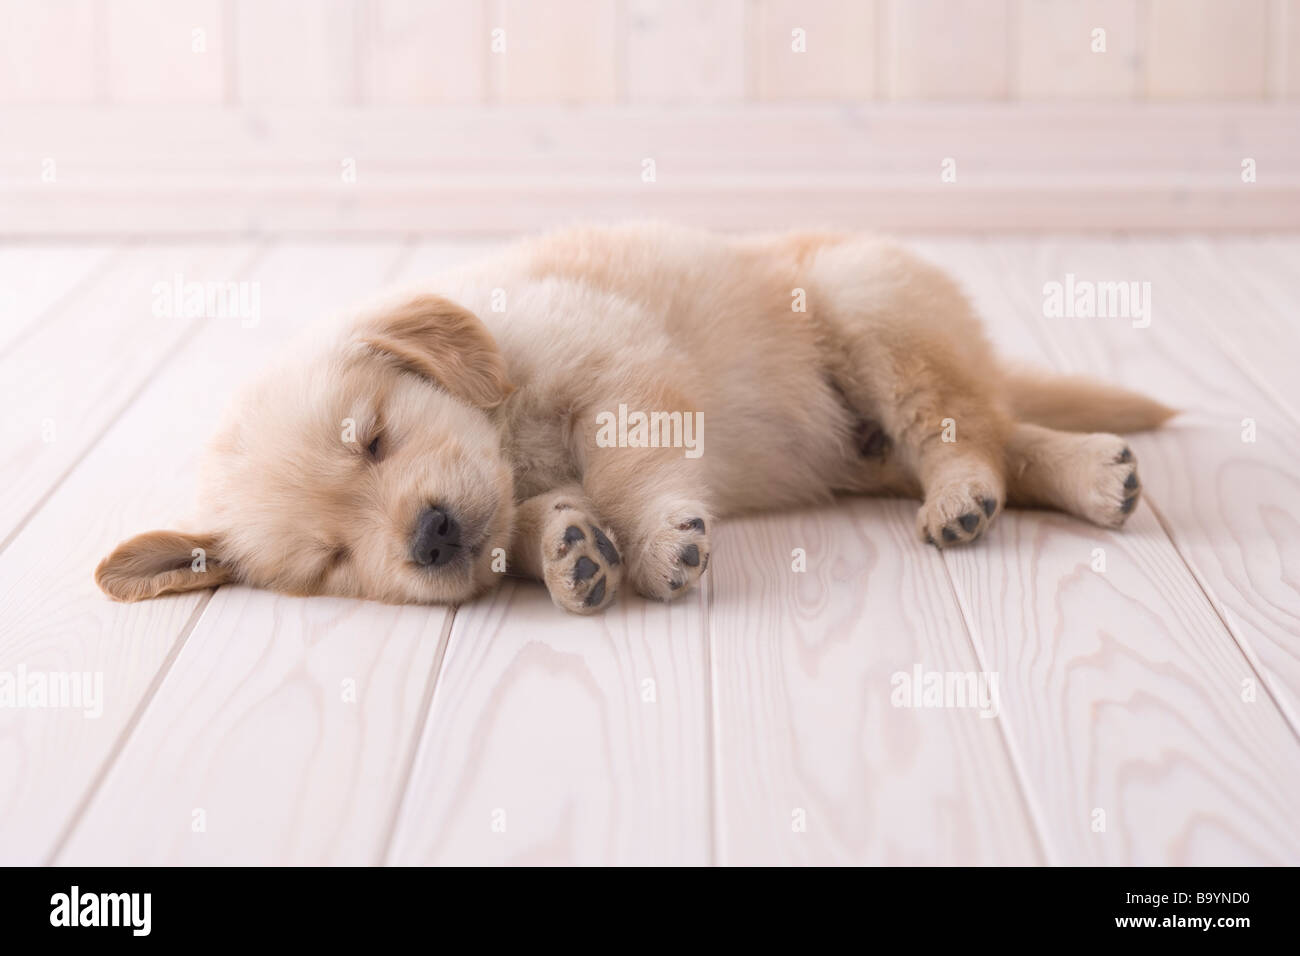 Golden retriever sleeping on floor Stock Photo